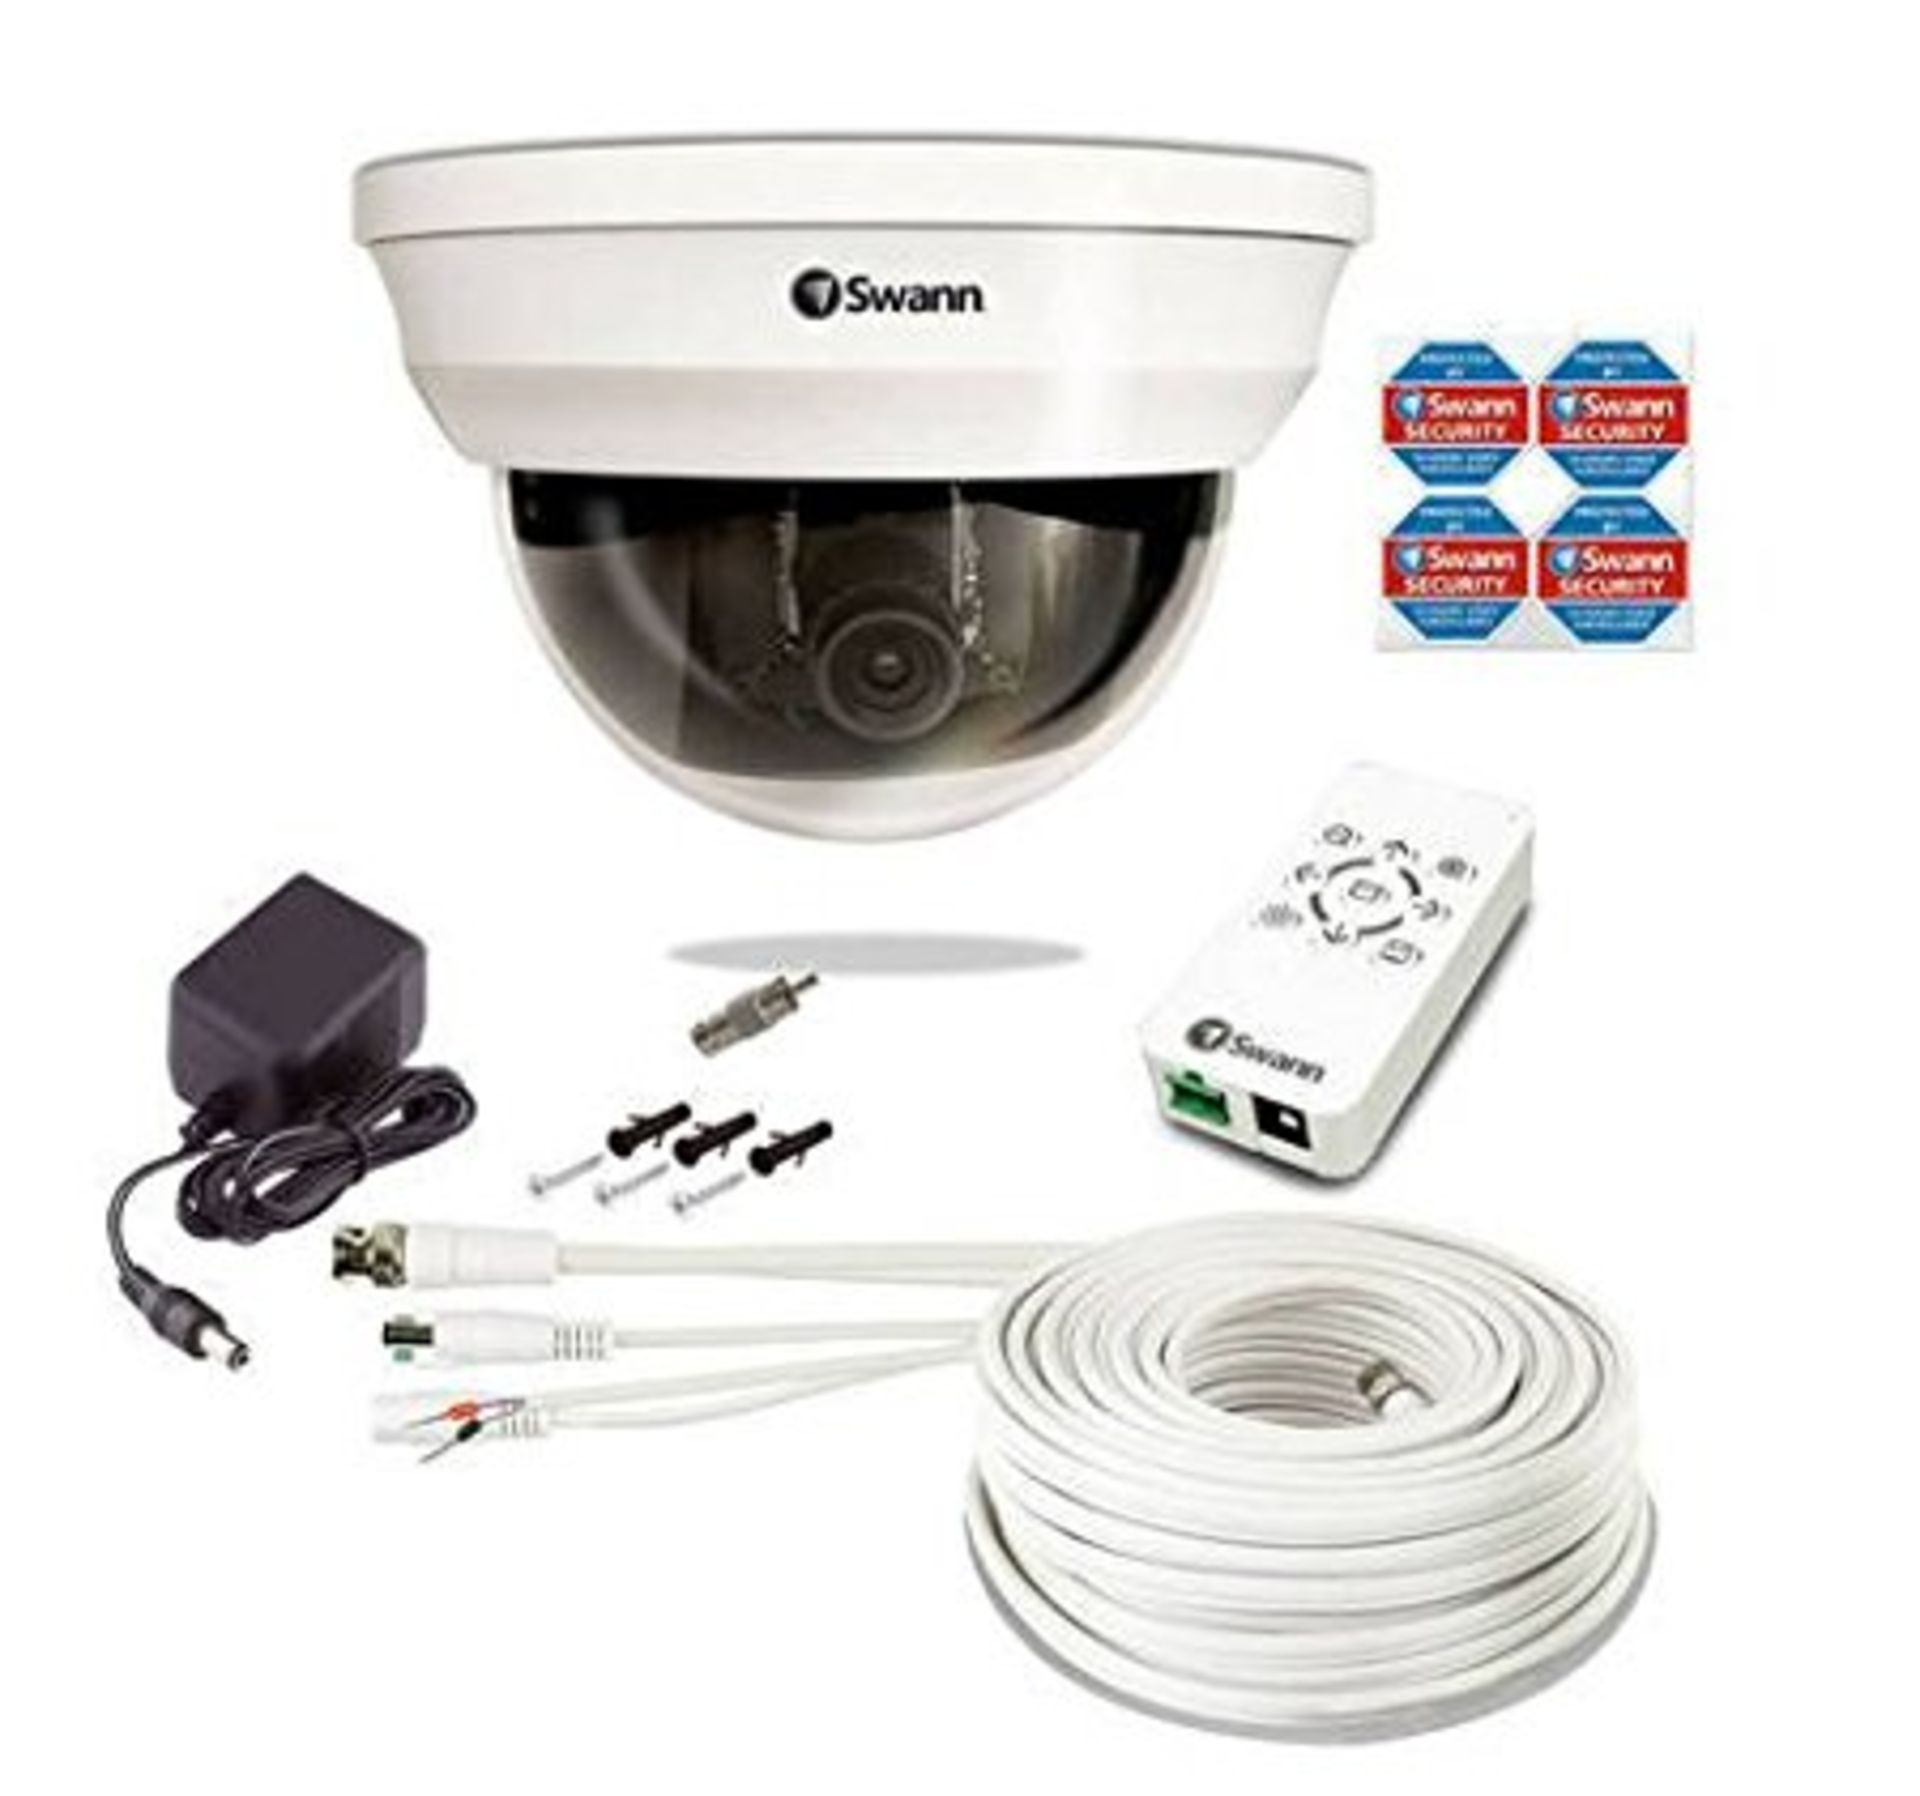 V *TRADE QTY* Brand New Swann PRO-861 Super Wide Angle Security Dome Camera - 850TVL - Vari Focal